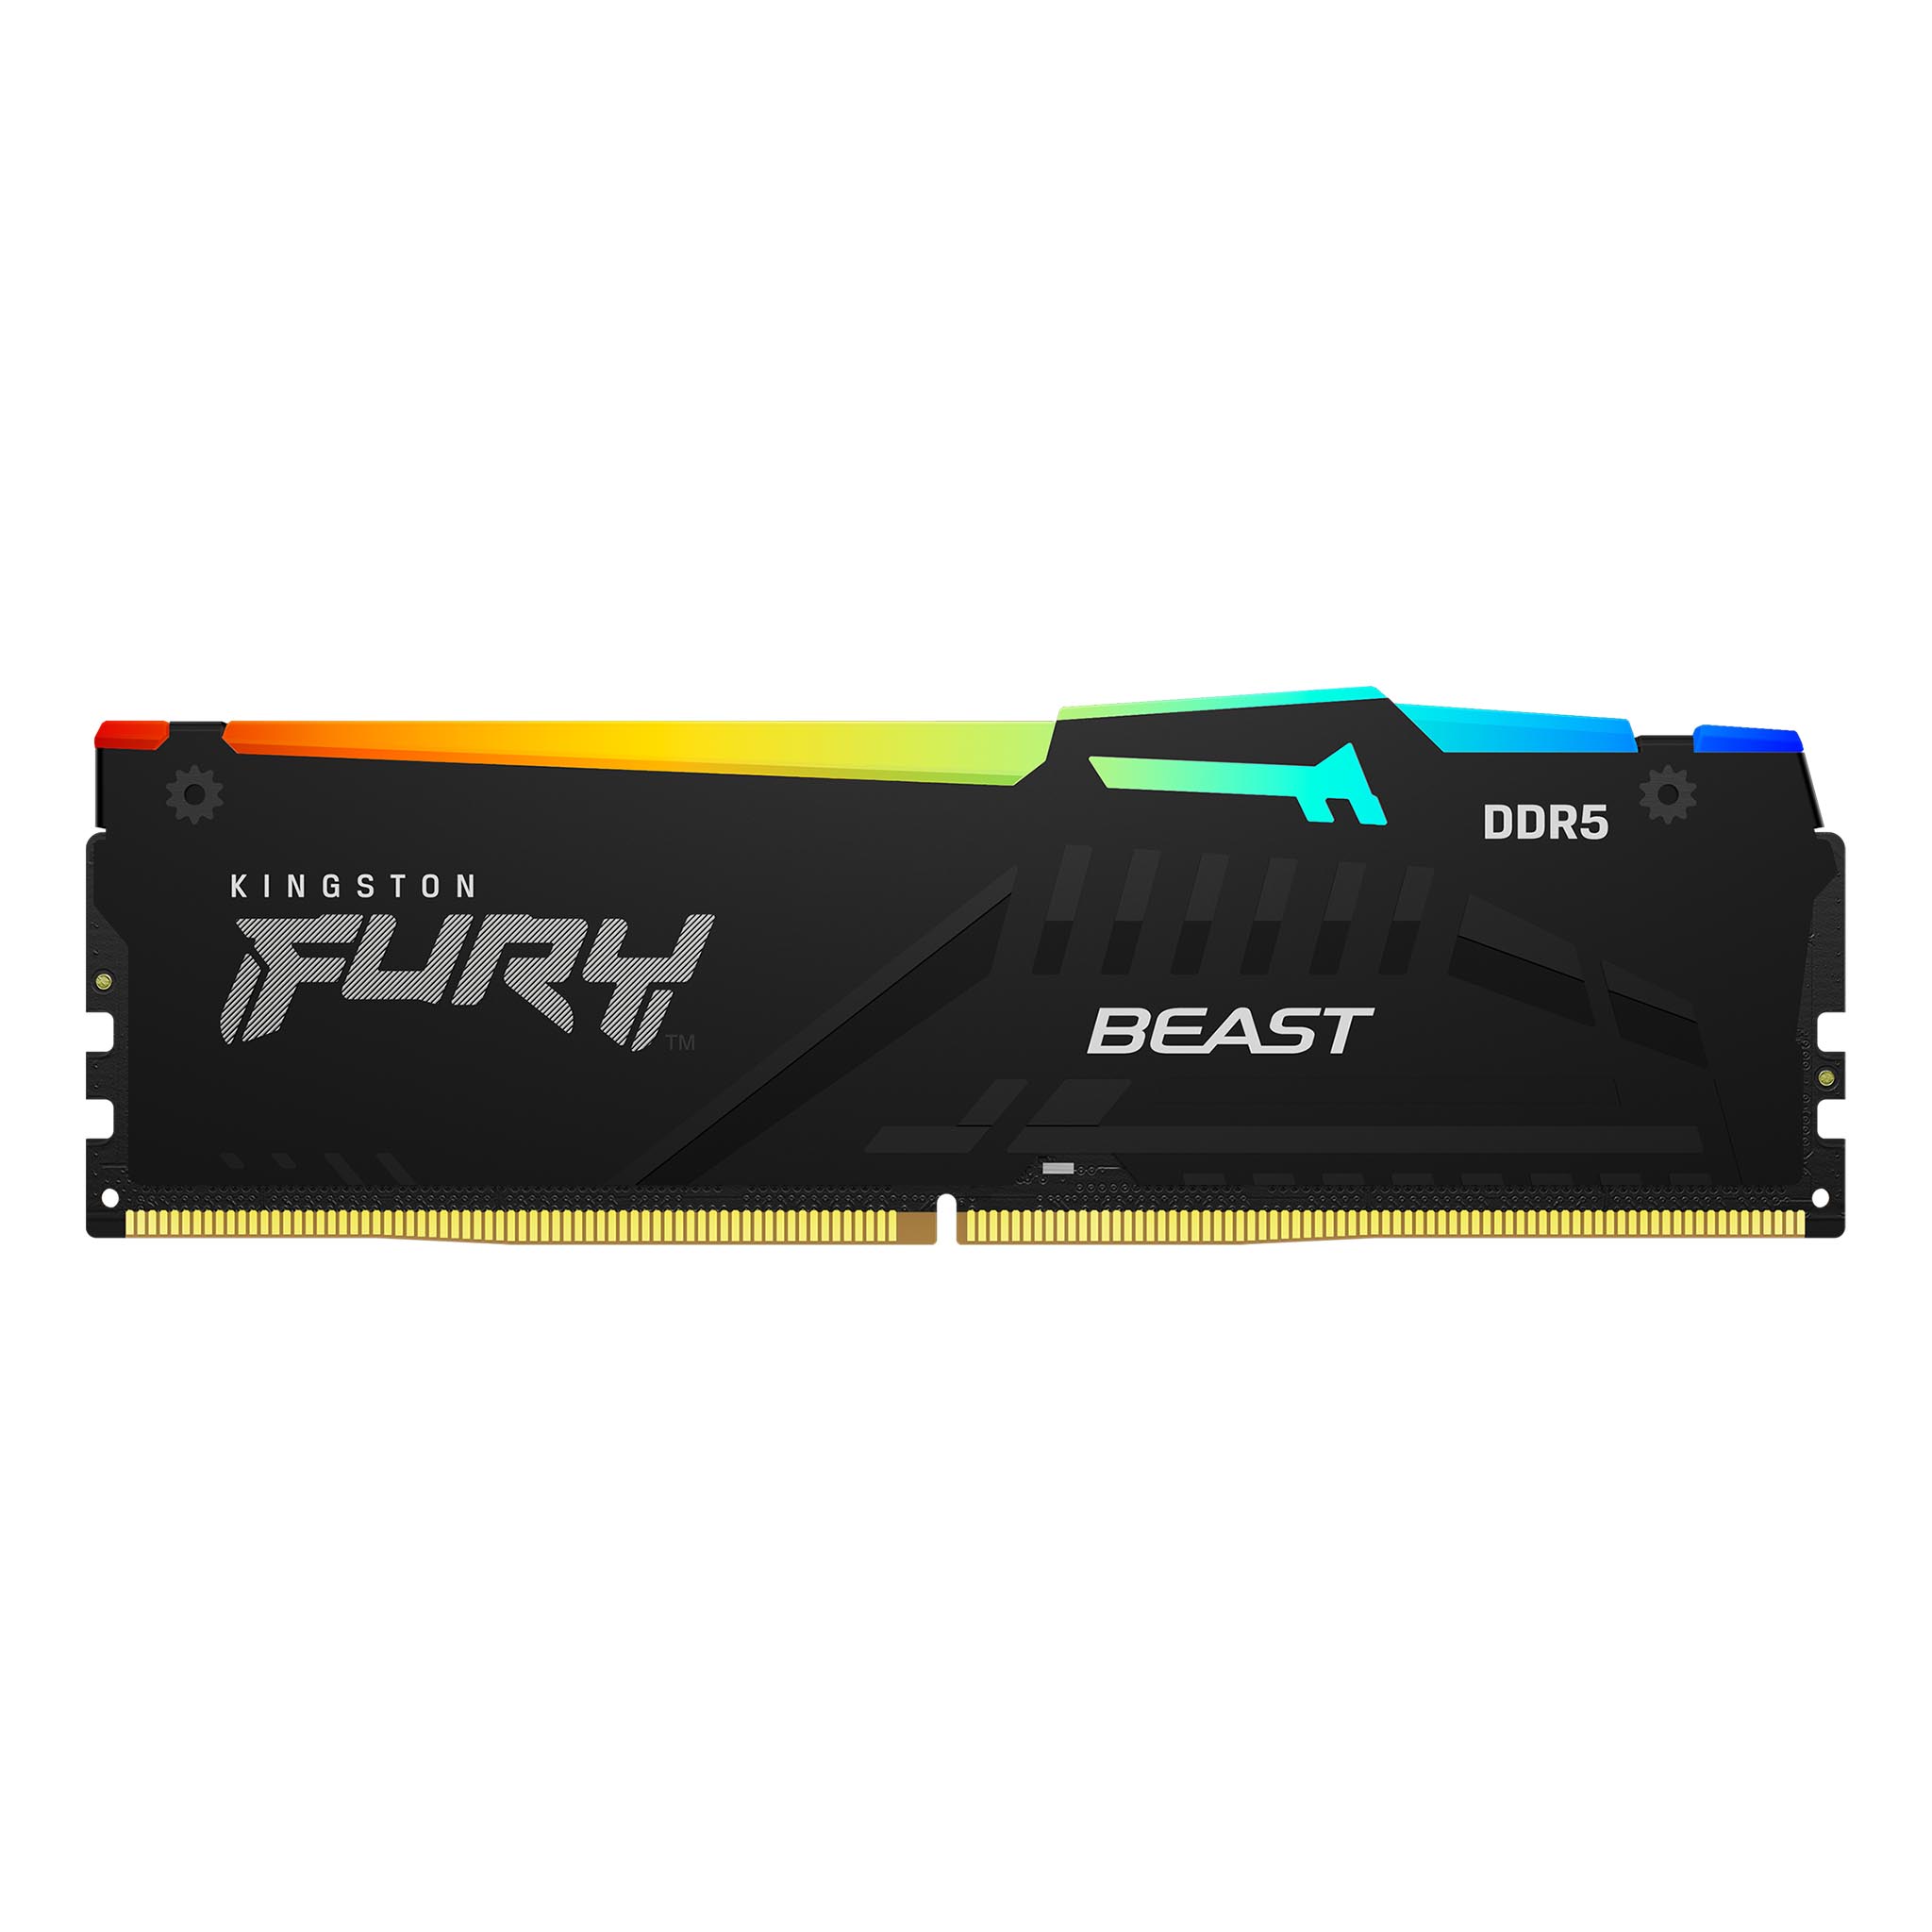 FURY Beast Black RGB DDR5 komponentko ram pomnilnik